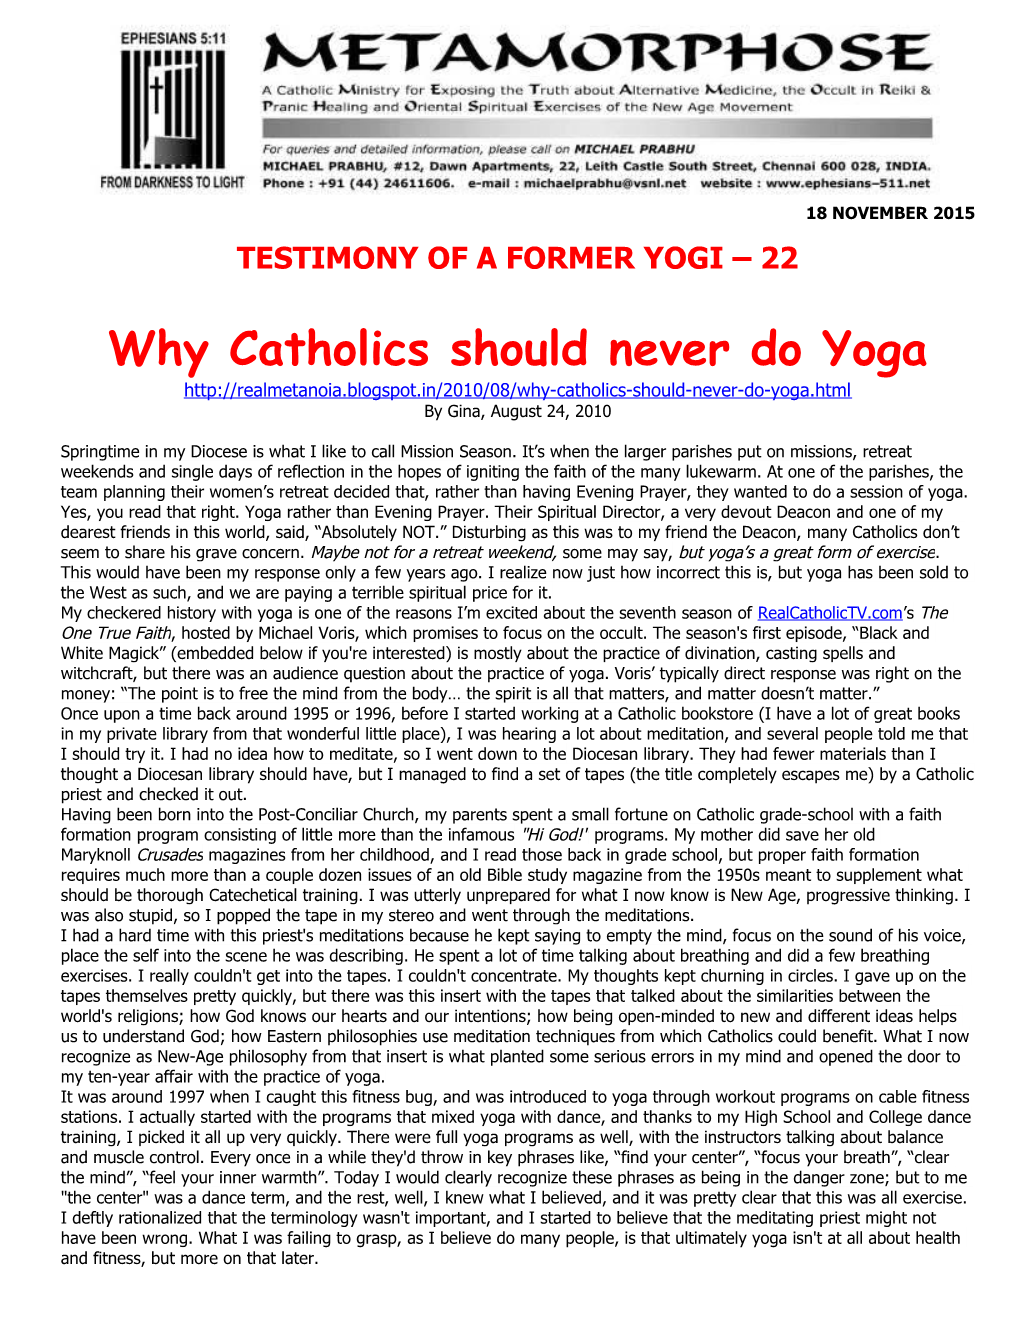 Why Catholics Should Never Do Yoga